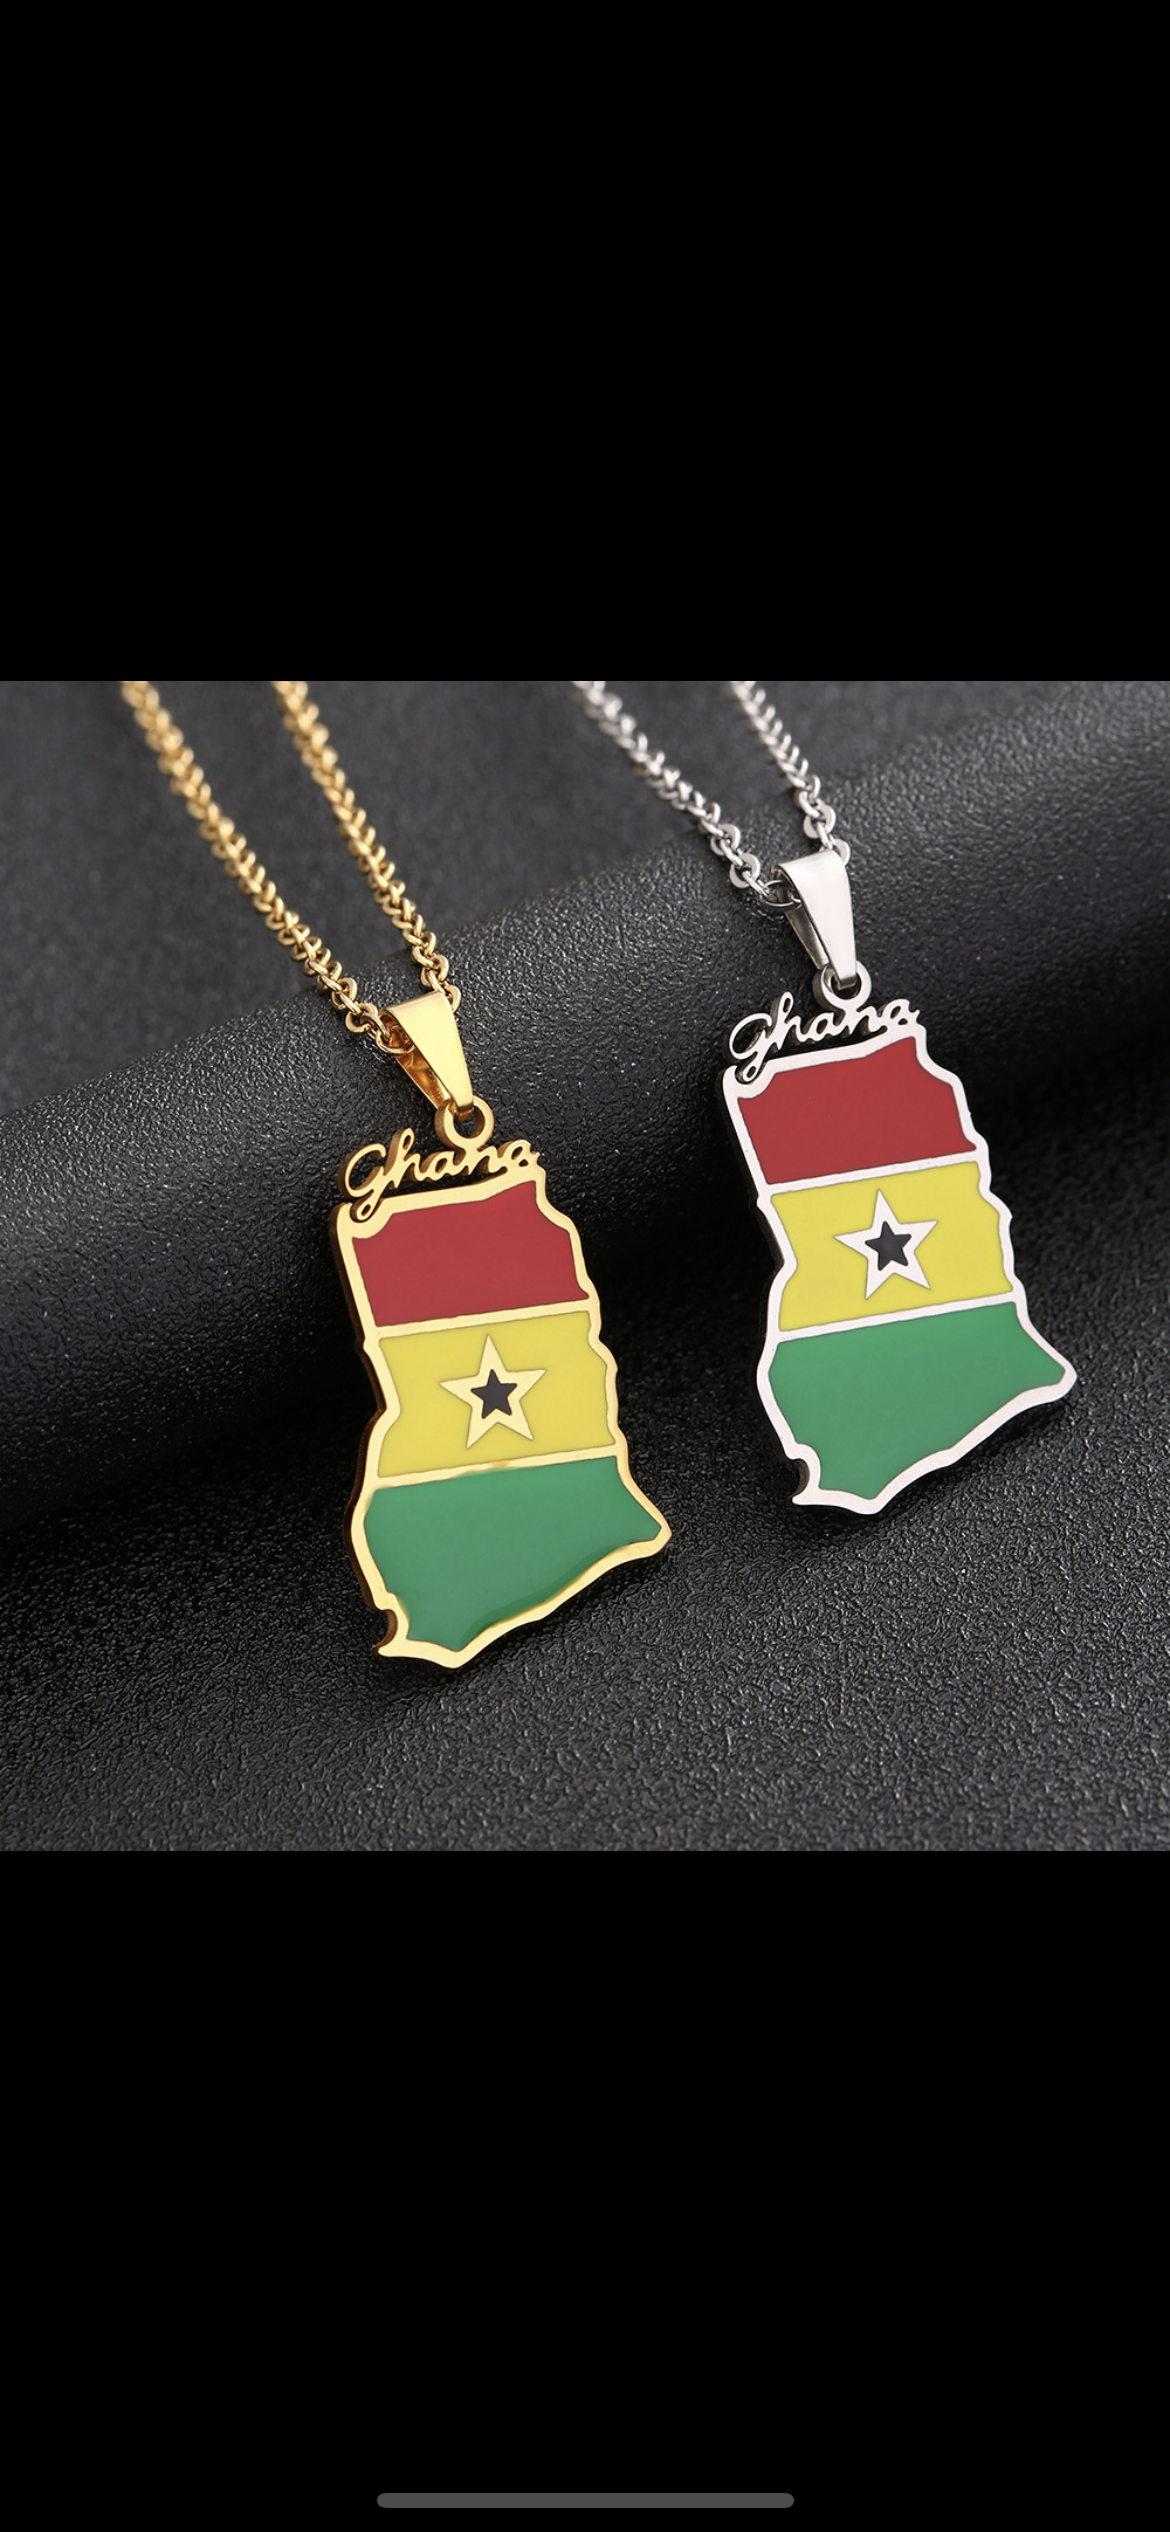 Necklace - Ghana - The Black Star 🇬🇭